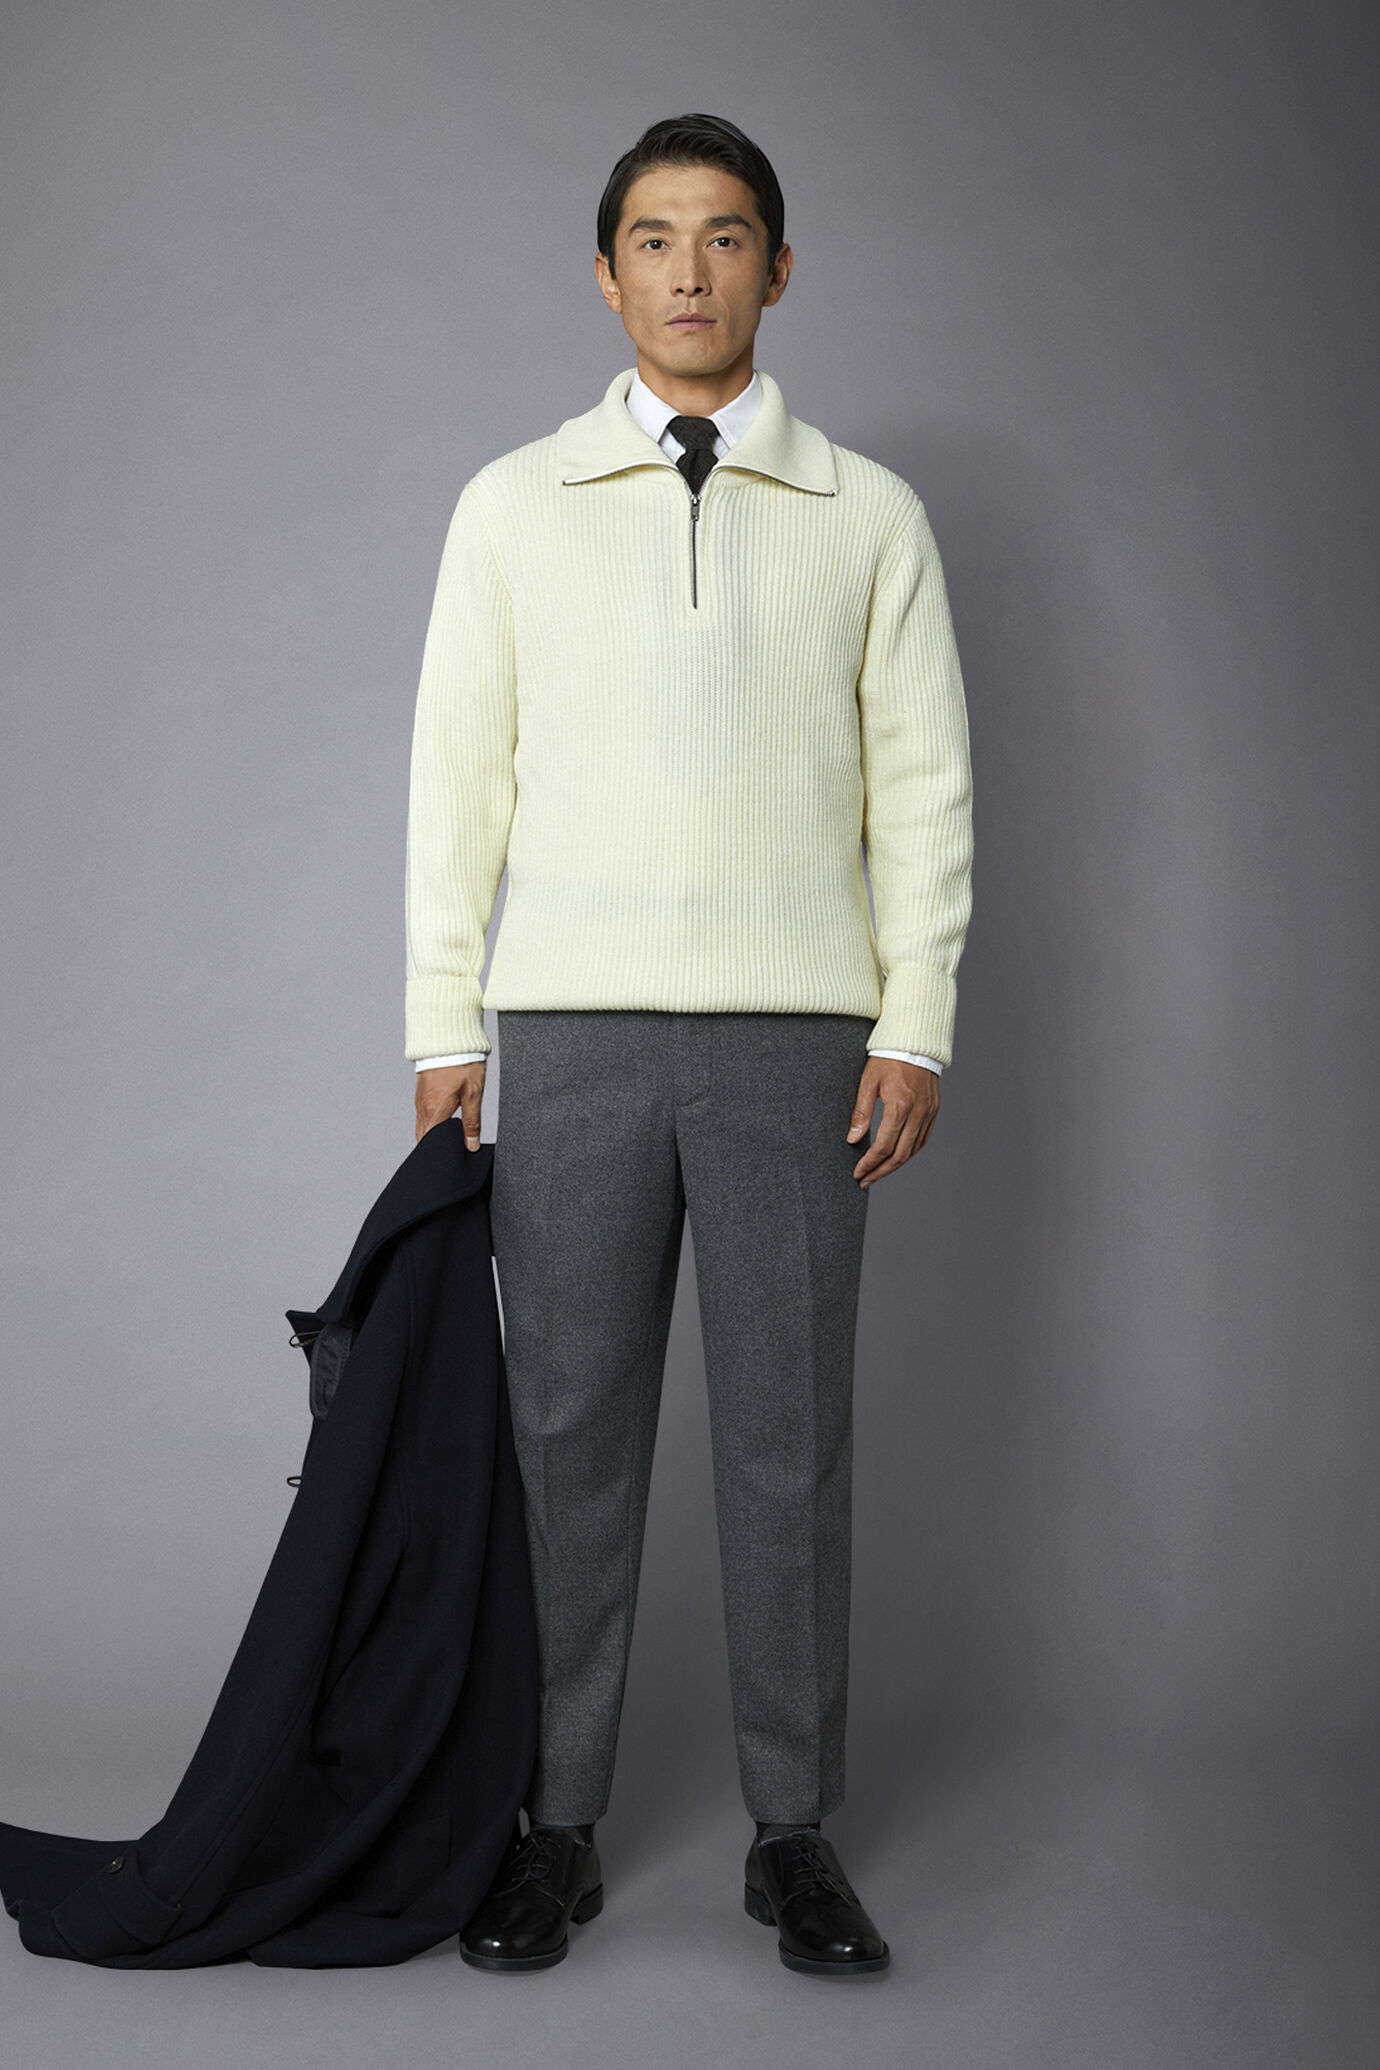 Men's wool-blend zip neck sweater with English rib knit regular fit